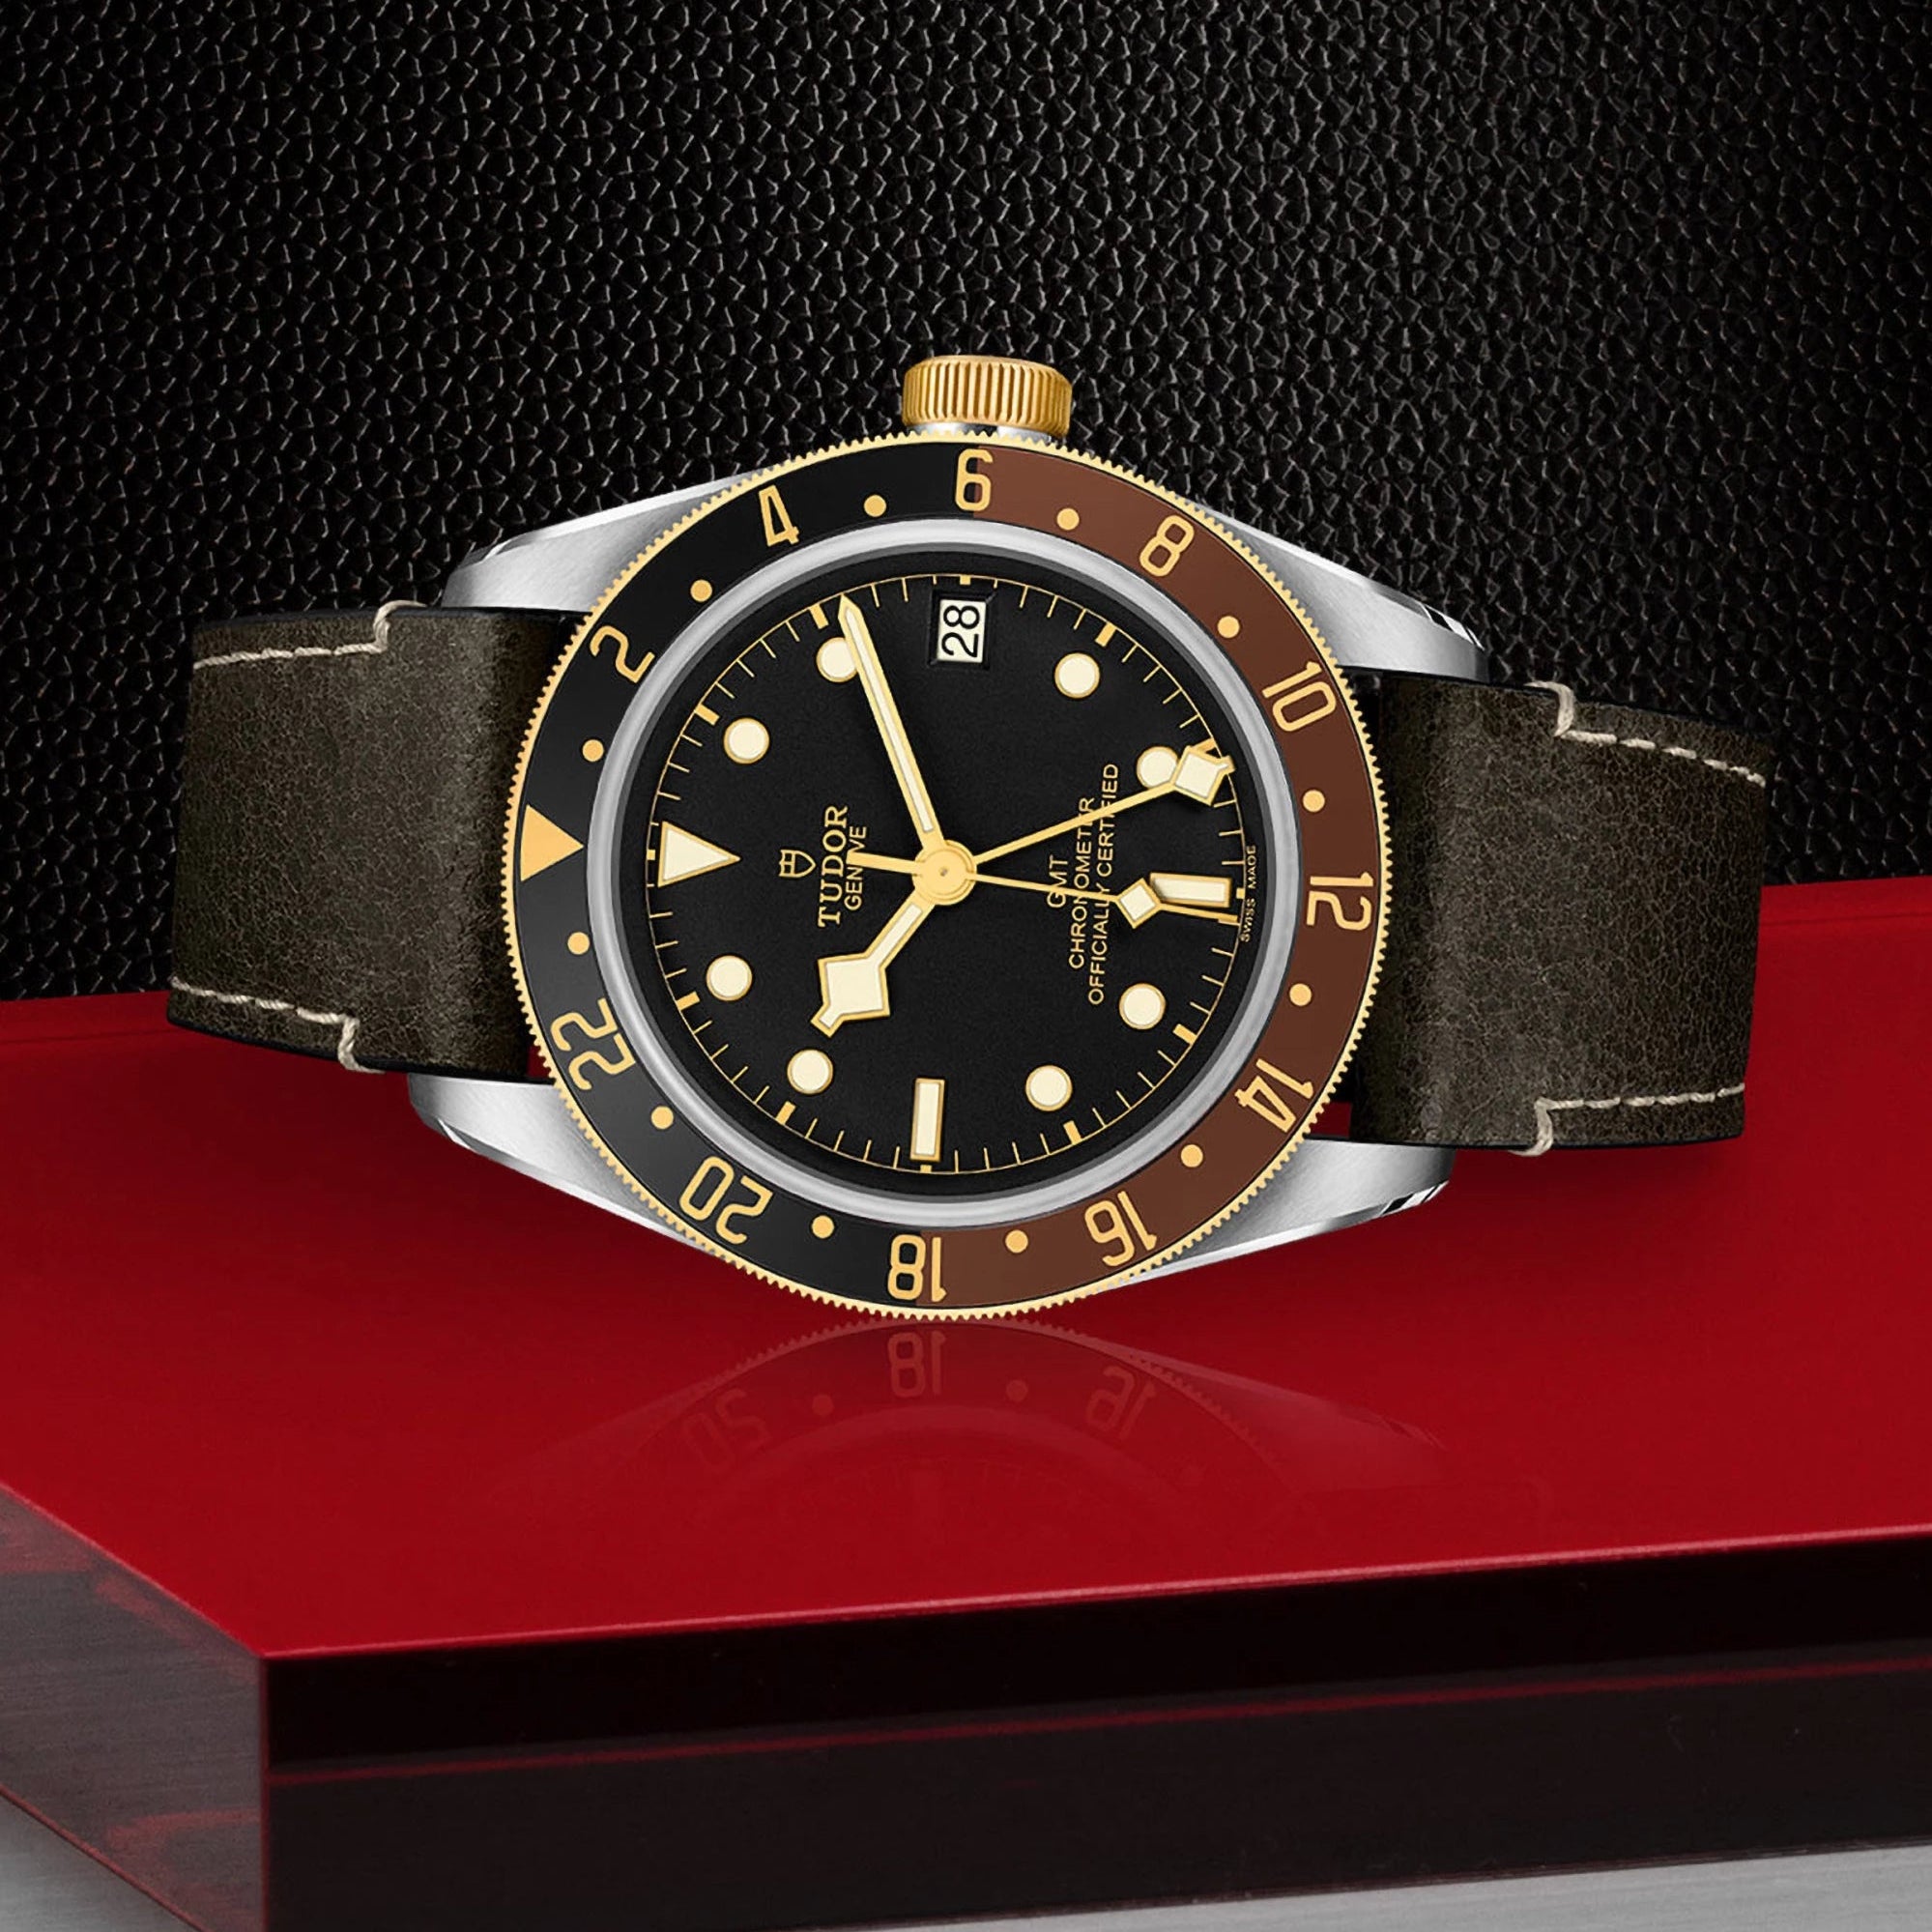 TUDOR Watch TUDOR Black Bay GMT S&G 41mm Case, Black Dial, Brown Leather Bracelet (M79833MN-0003)